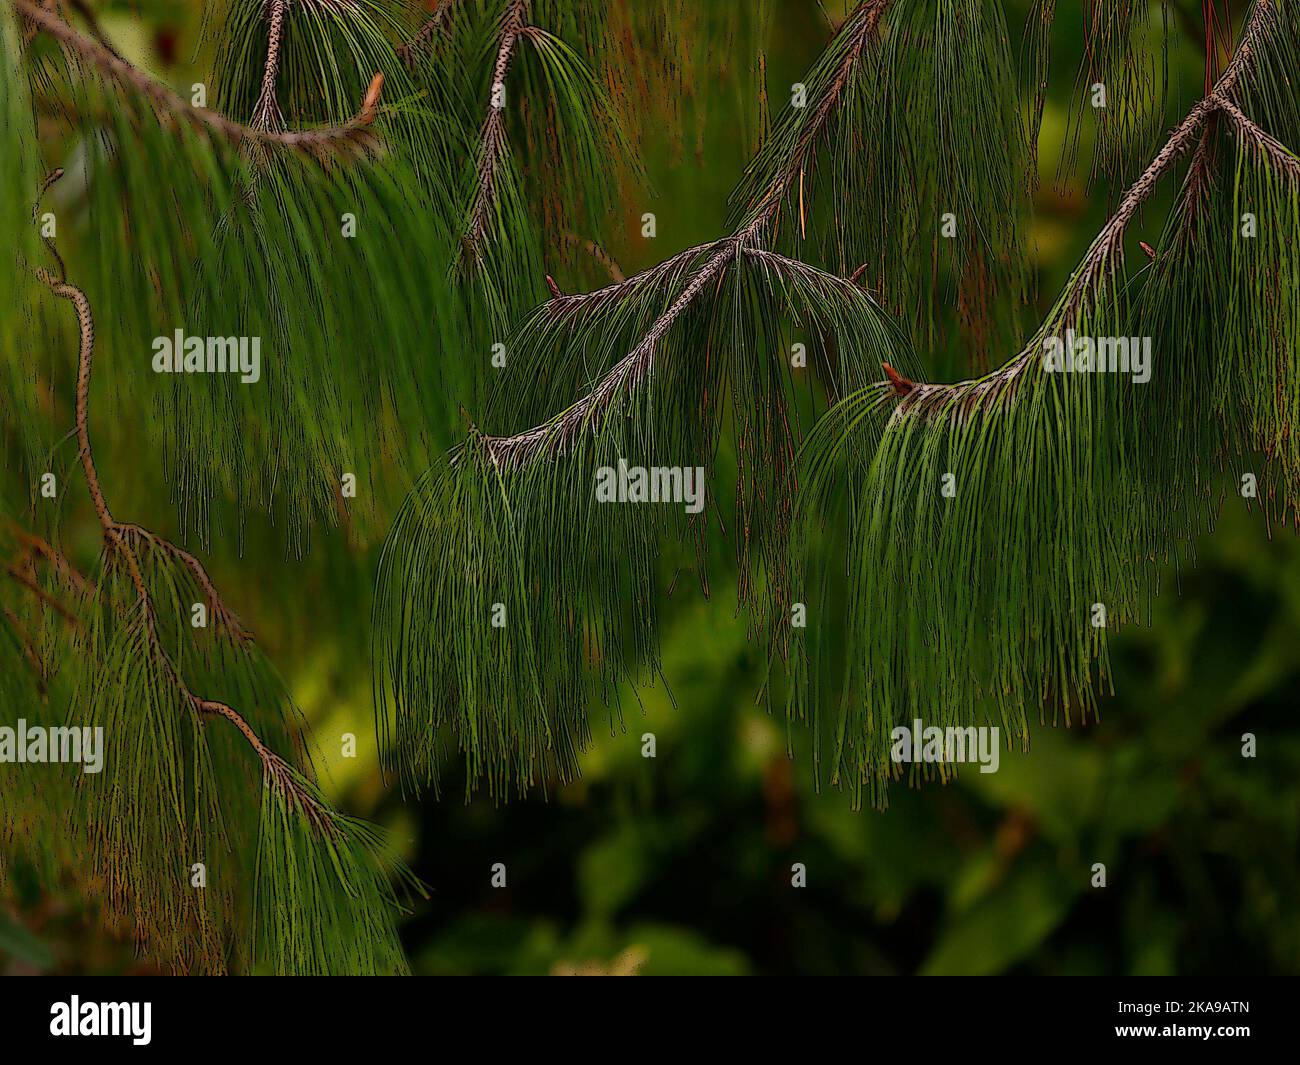 Illustrative close up of the green trailing pine needles of the evergreen garden tree Pinus patula. Stock Photo